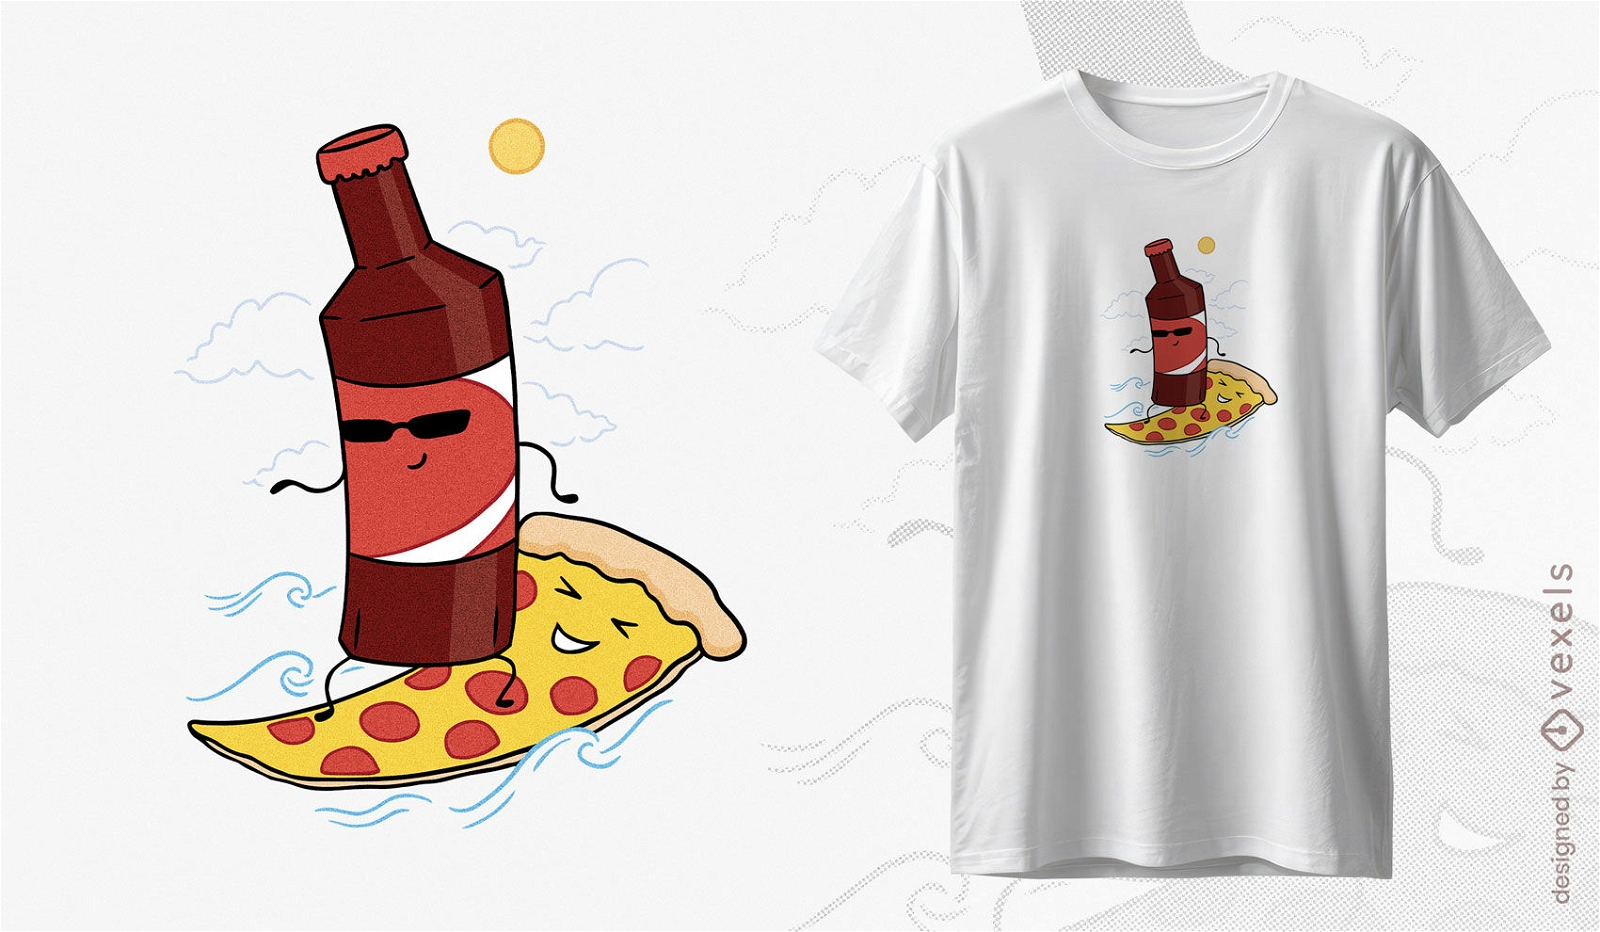 Relaxing soda bottle t-shirt design